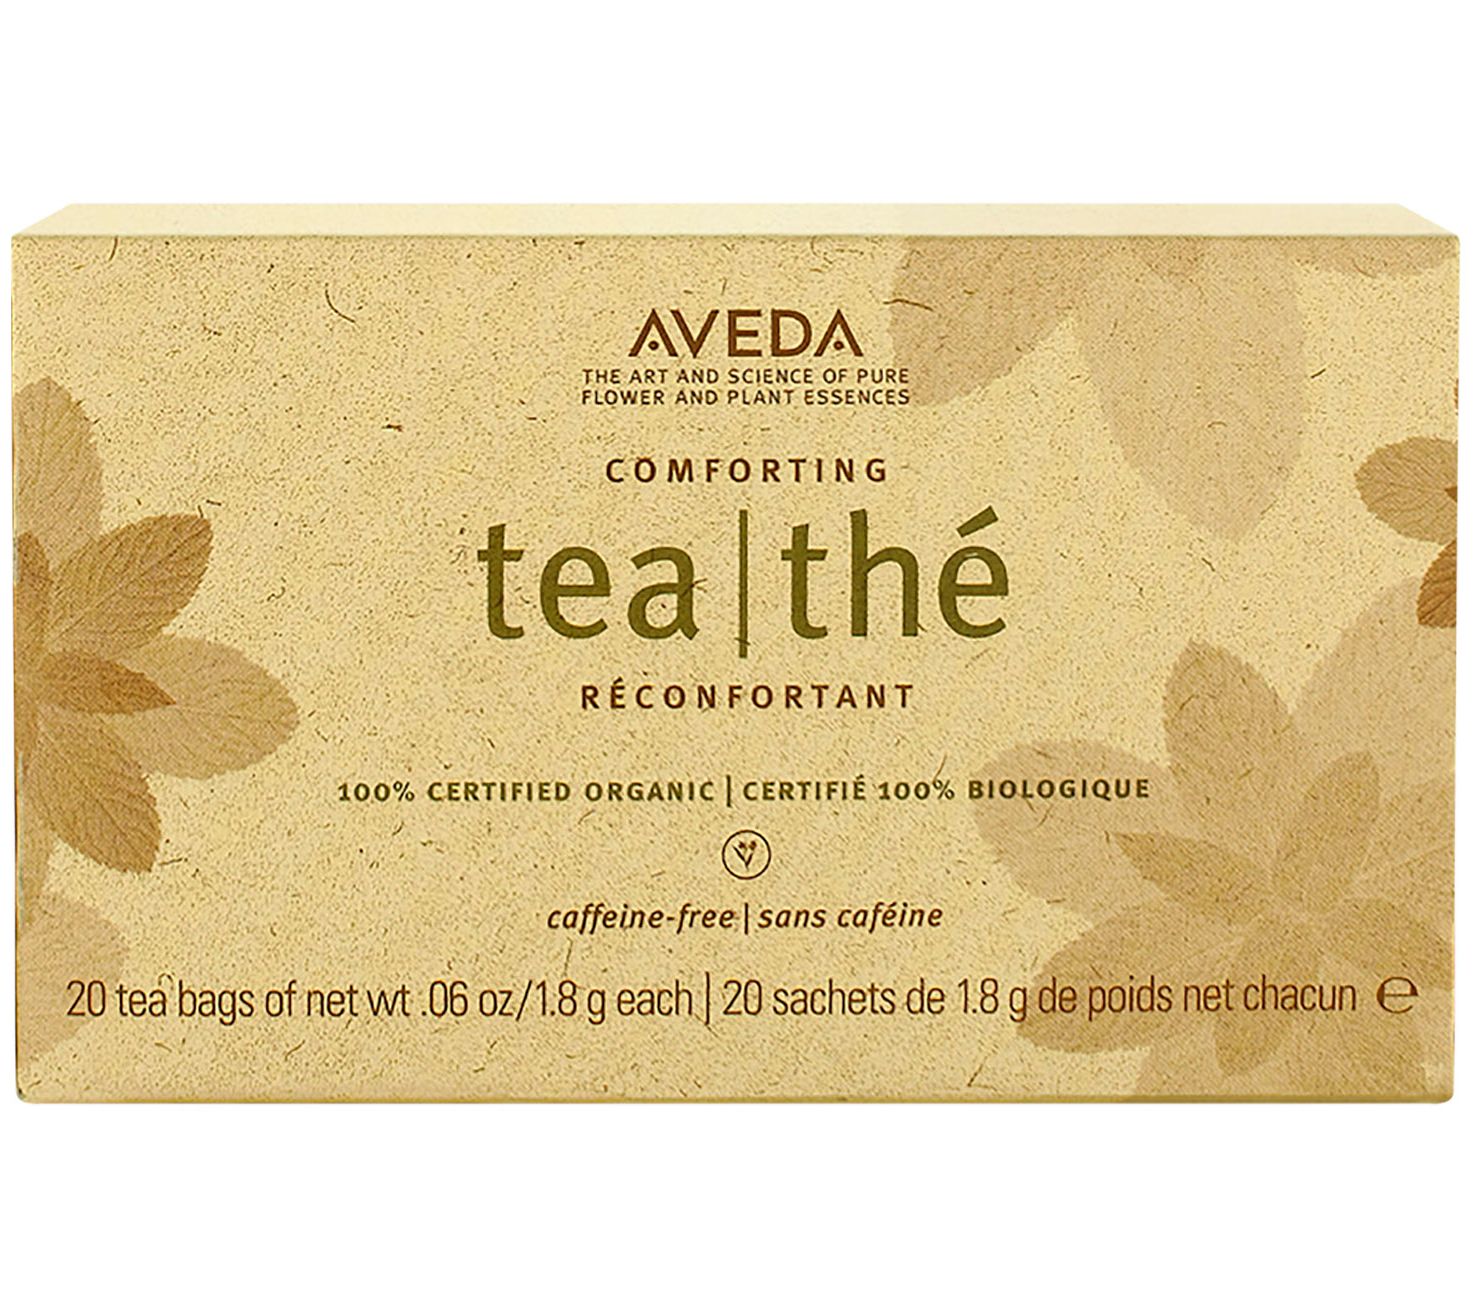 Aveda Comforting Tea Bags 20 Count QVC com